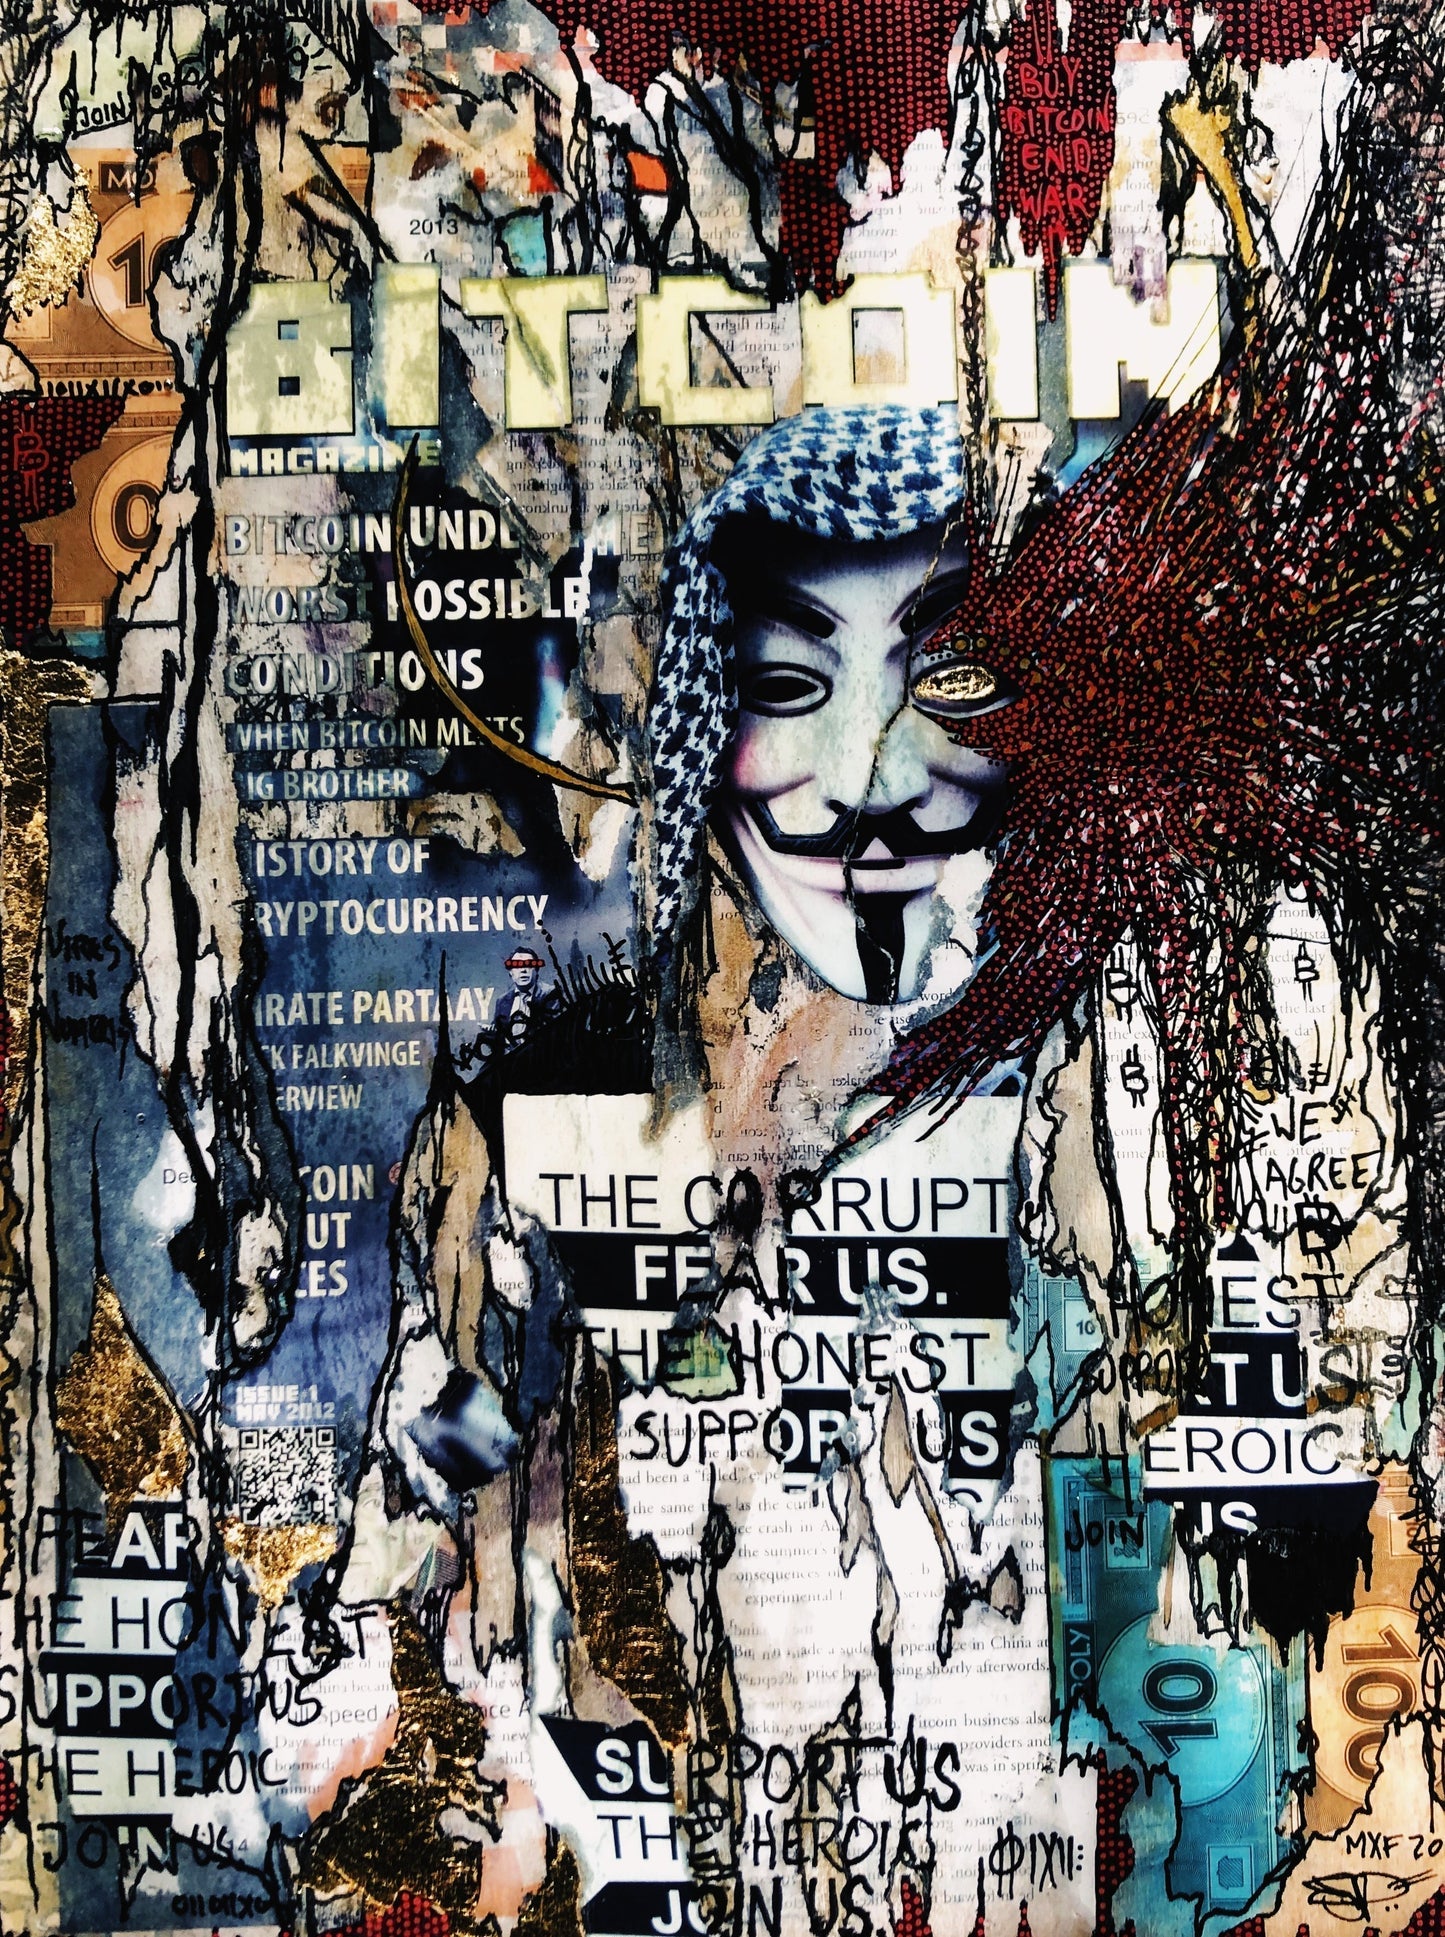 Issue #16 Bitcoin Magazine Historic Covers